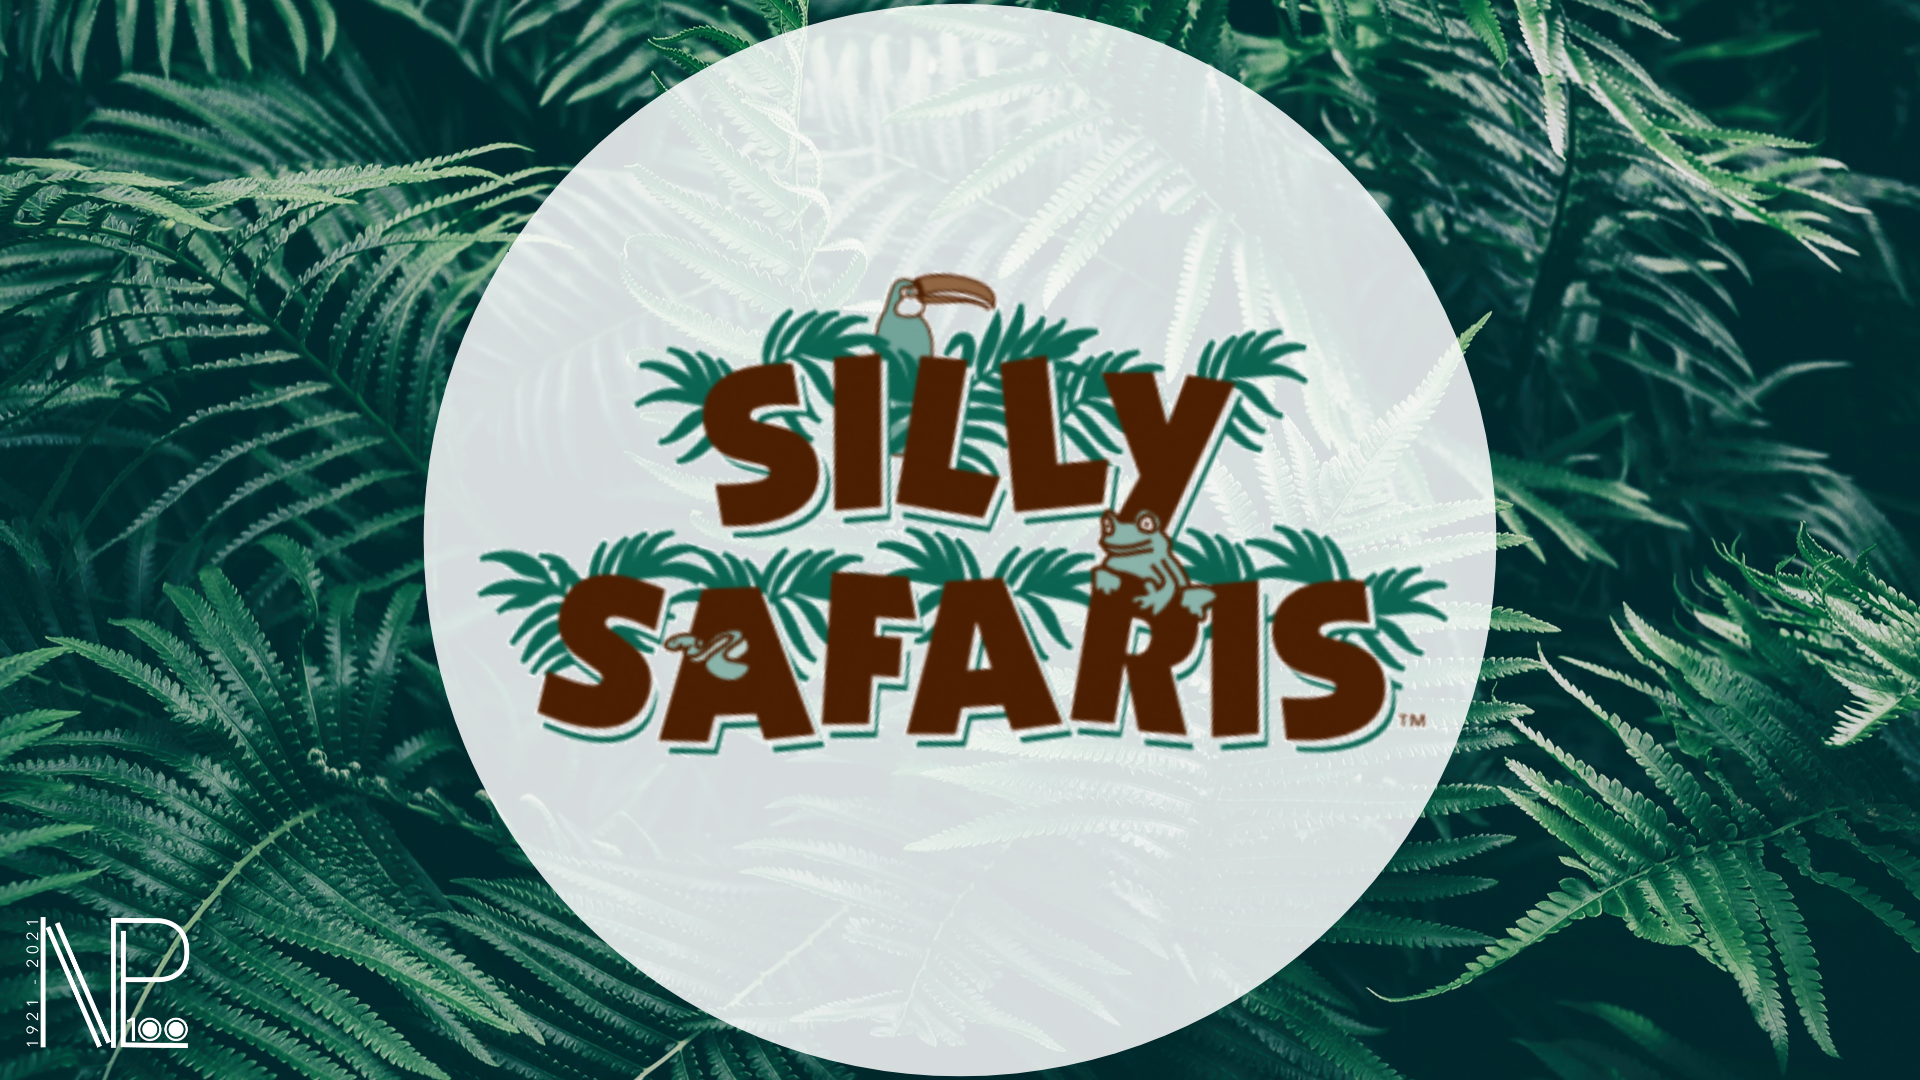 silly safaris